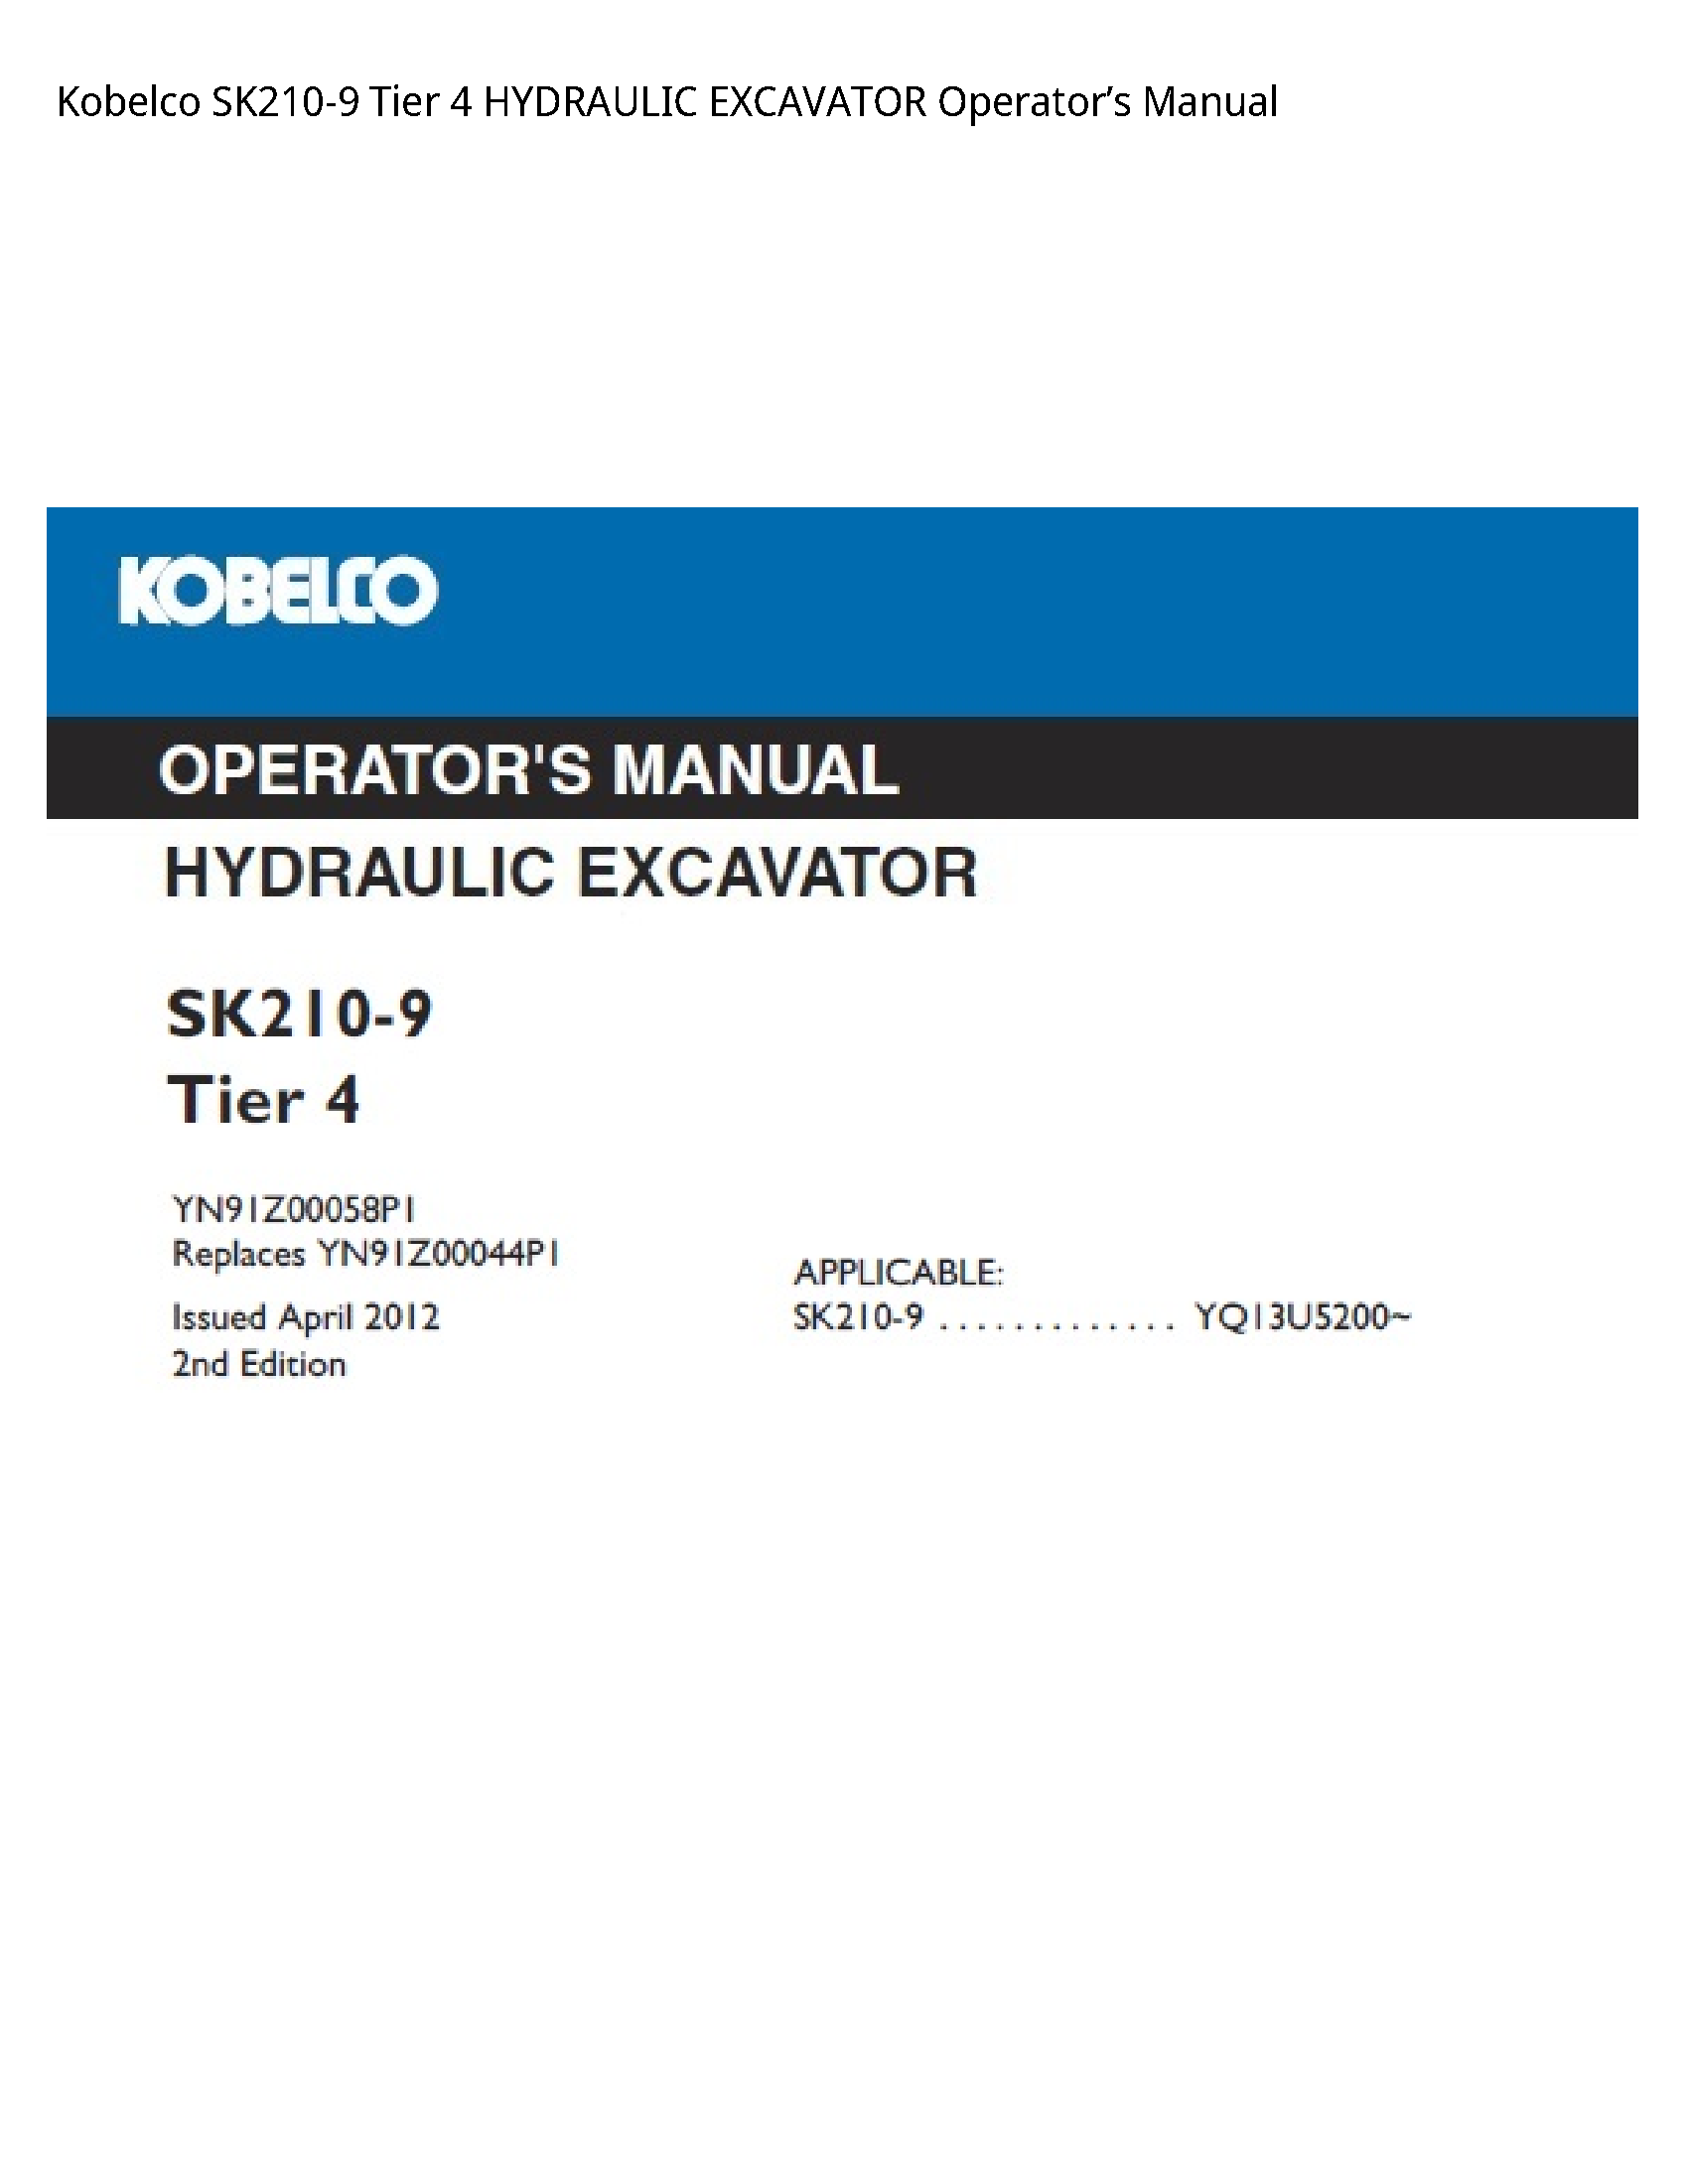 Kobelco SK210-9 Tier HYDRAULIC EXCAVATOR Operator’s manual